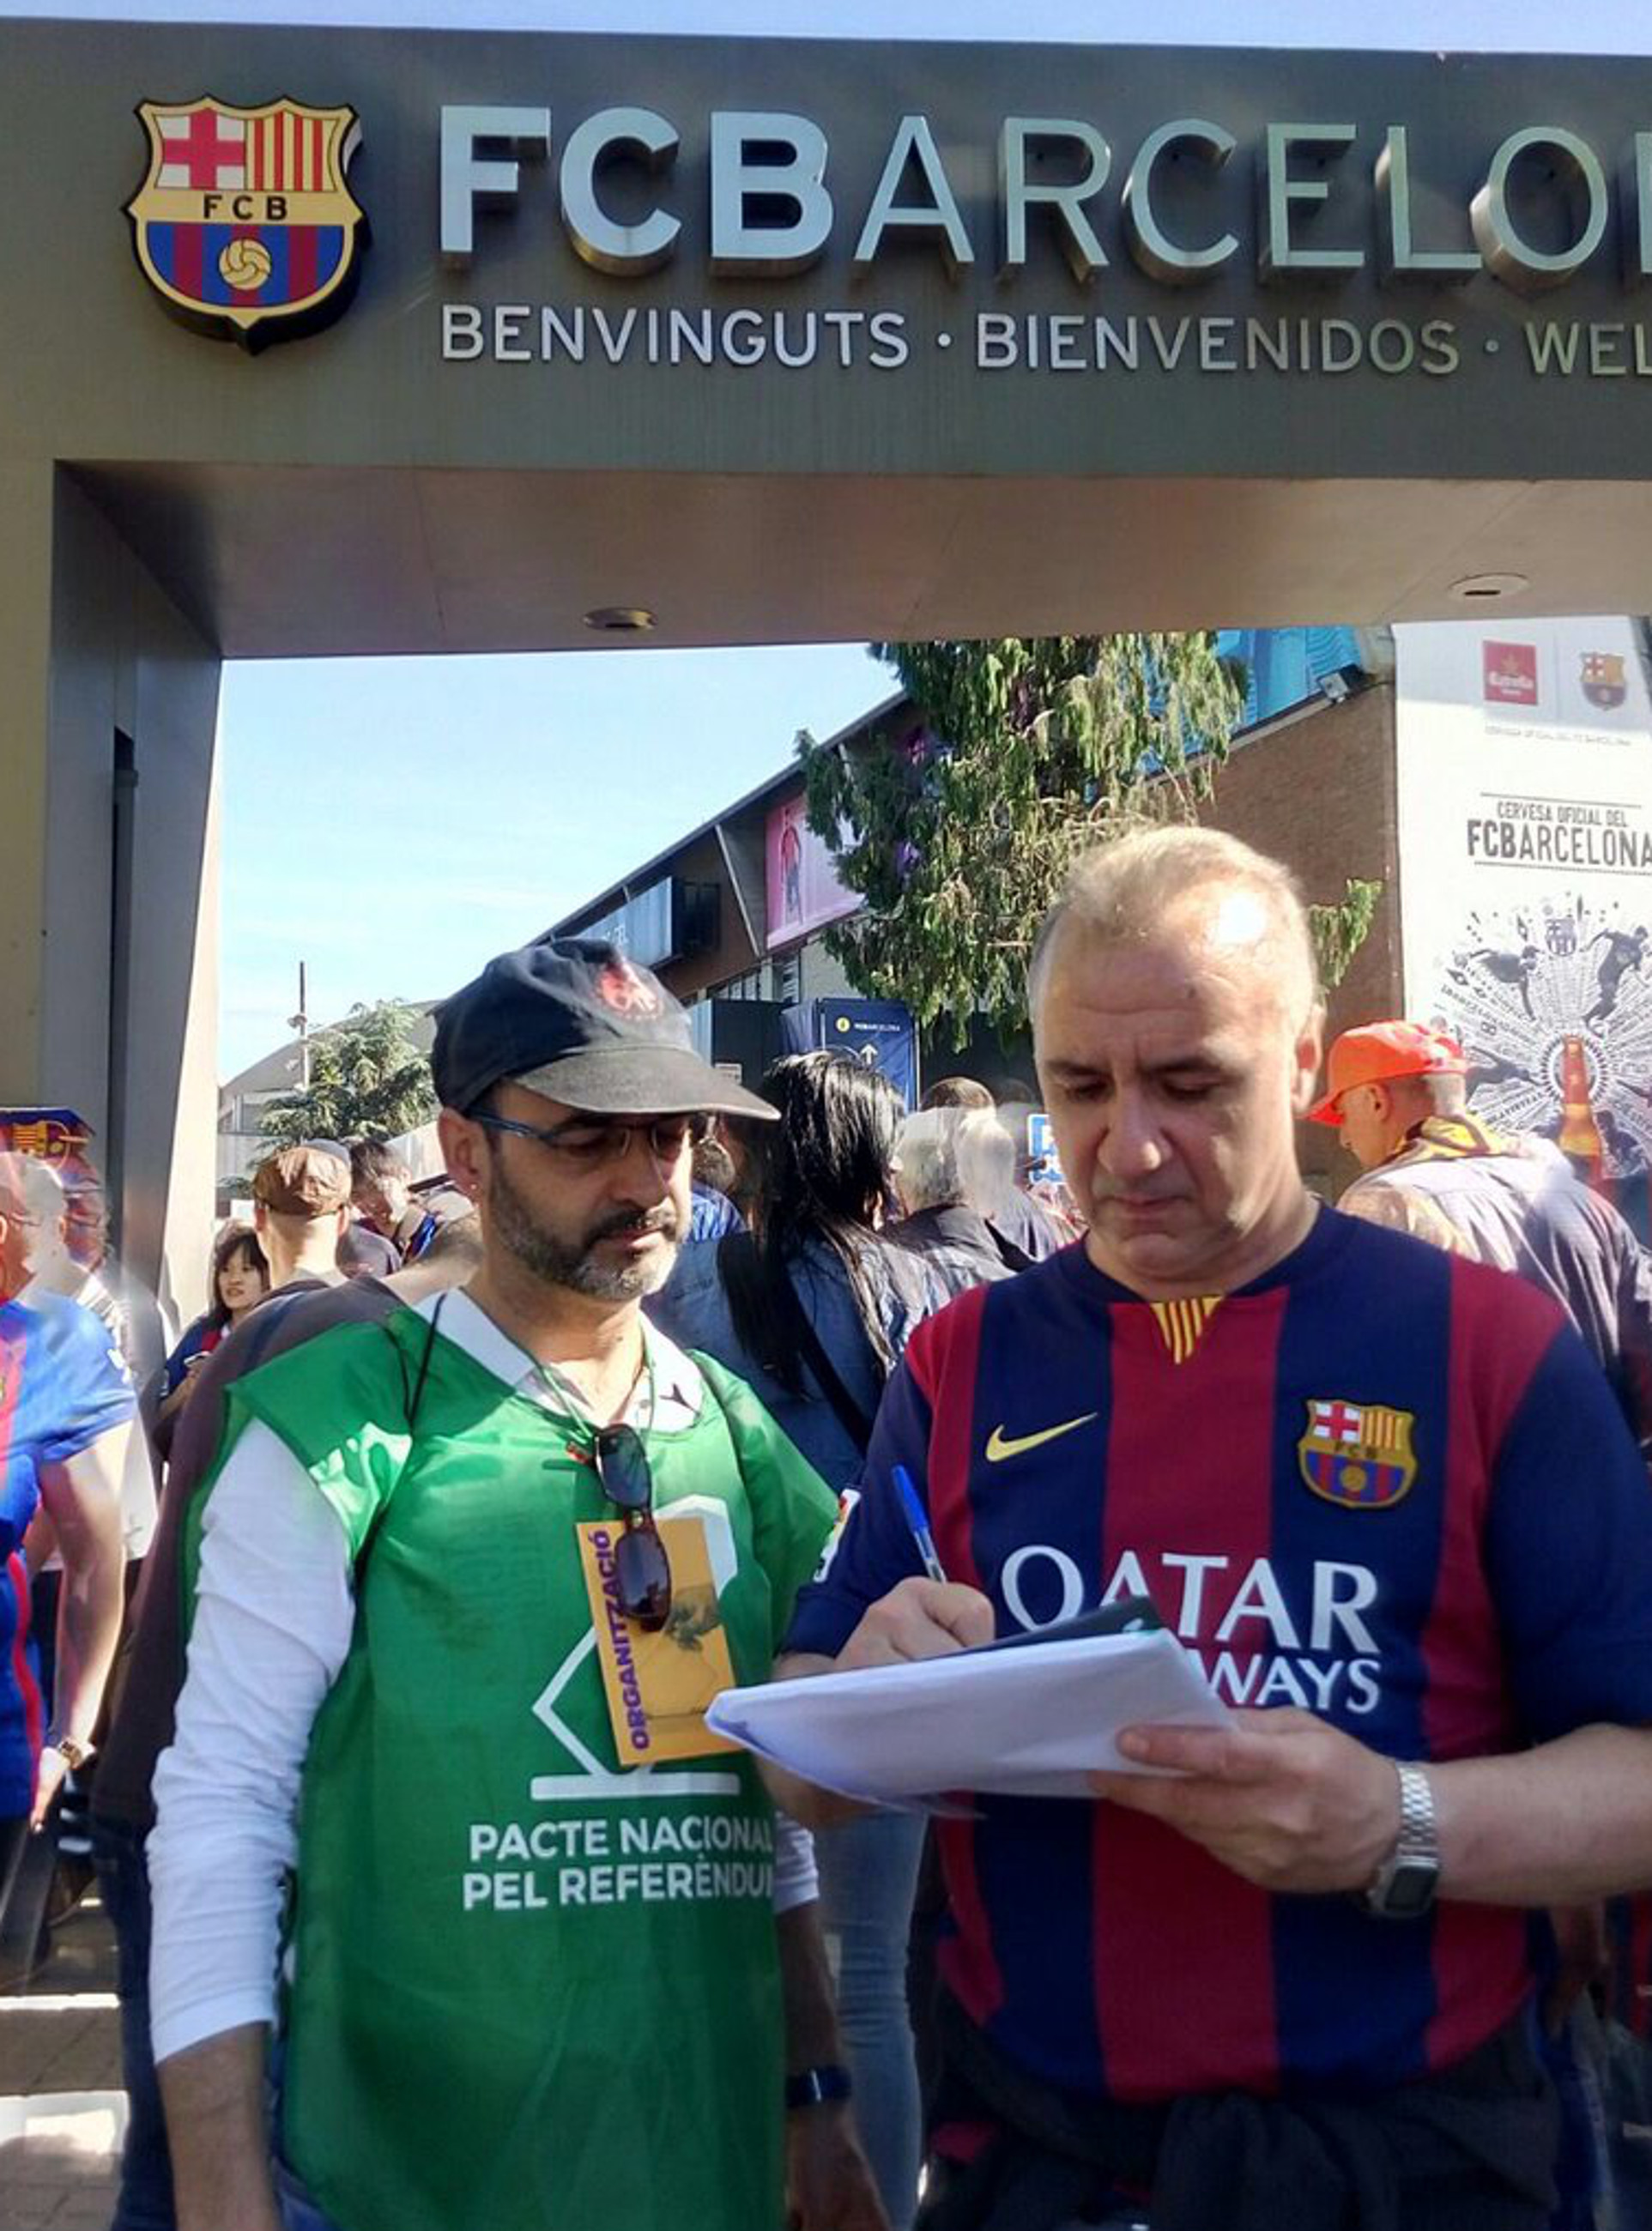 A Barça fan signs for the National Pact for the Referendum (PNR) outside Camp Nou (by Pacte Nacional pel Referèndum).